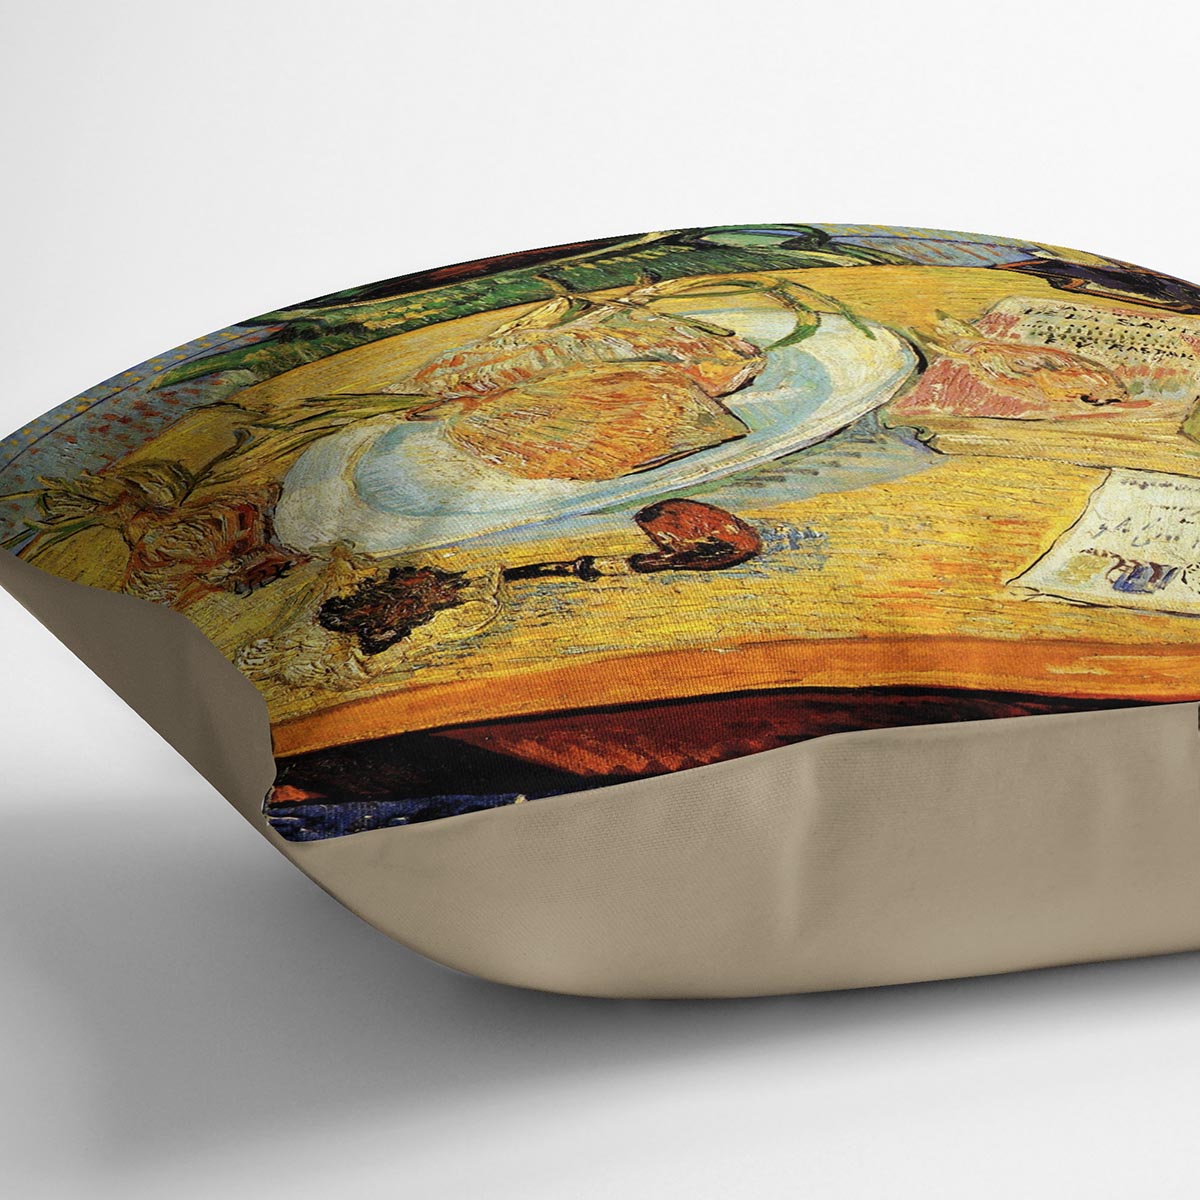 Still Life Drawing Board Pipe Onions and Sealing-Wax by Van Gogh Cushion